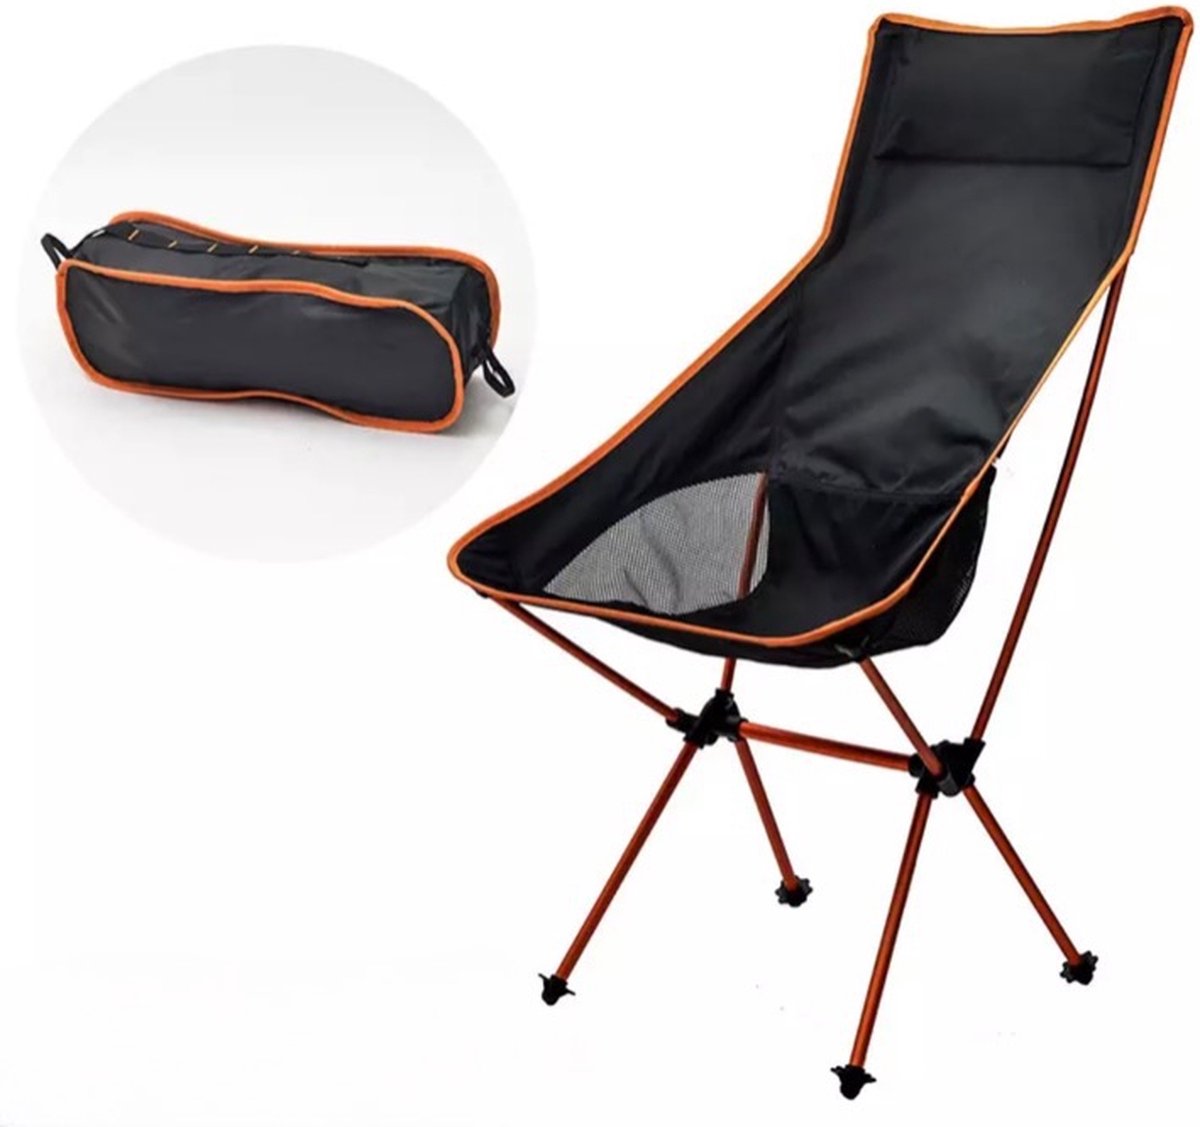 Strandstoel opvouwbaar met hoofdkussen - Kampeer vouwstoel - Karper/viskruk - Plooistoel - Ultralicht picknick meubel - Oranje